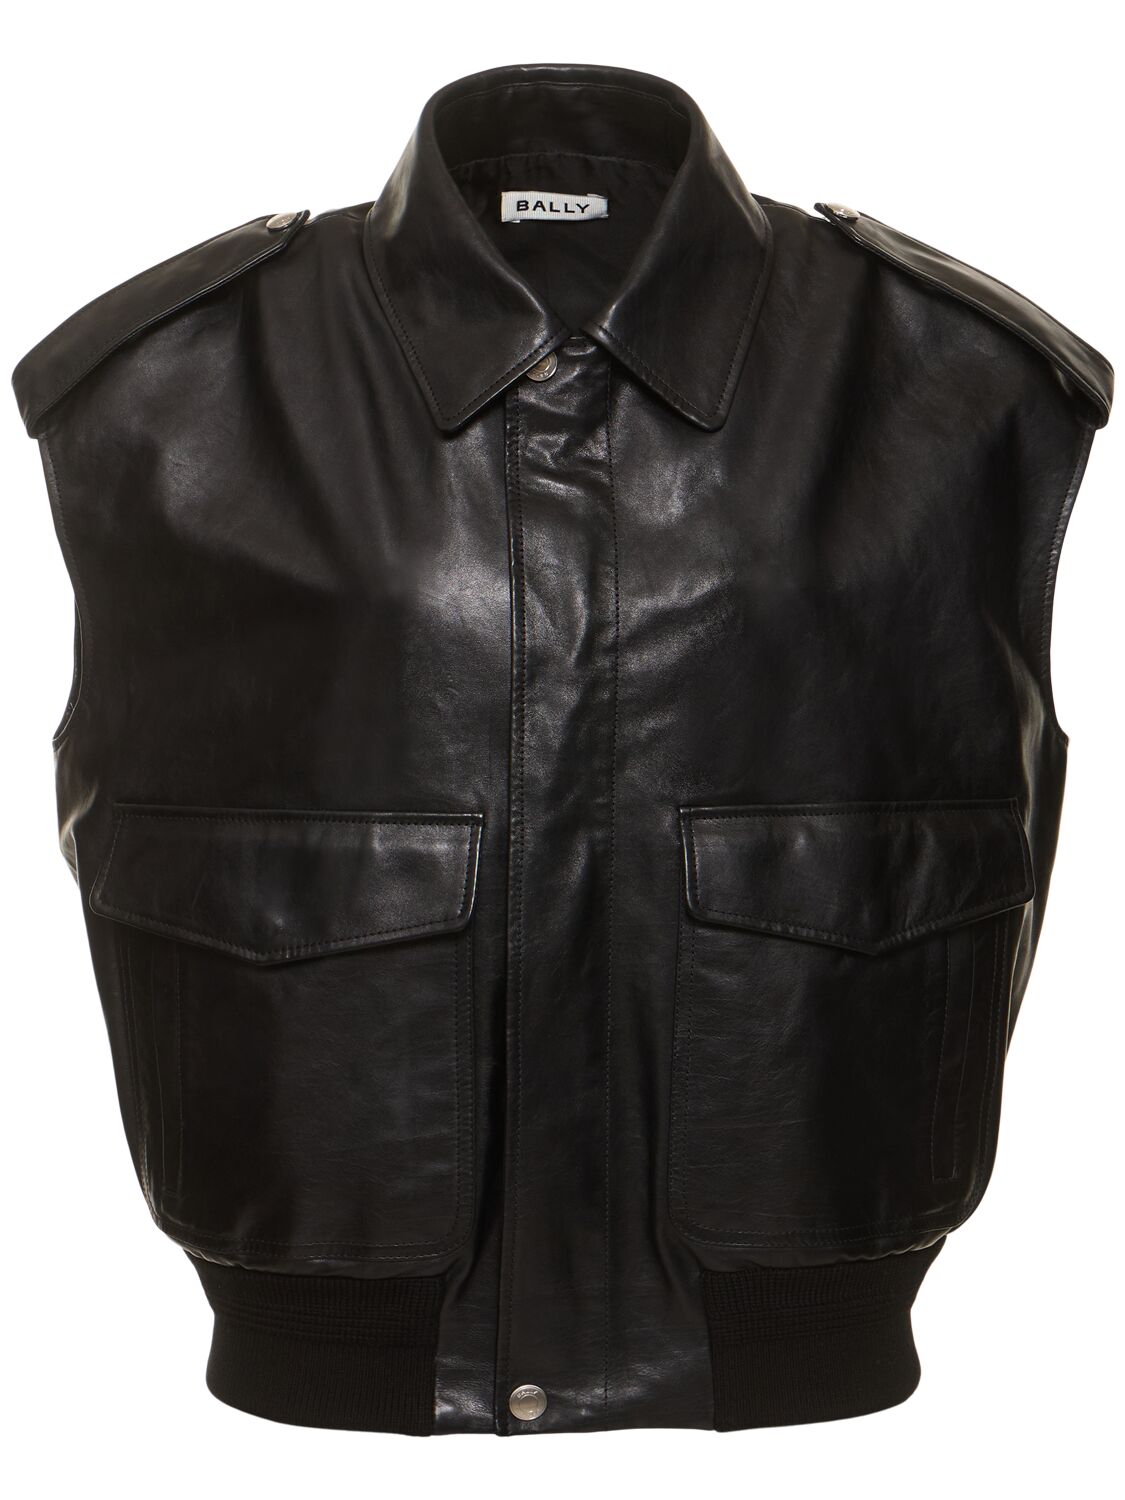 Leather Vest W/ Pockets